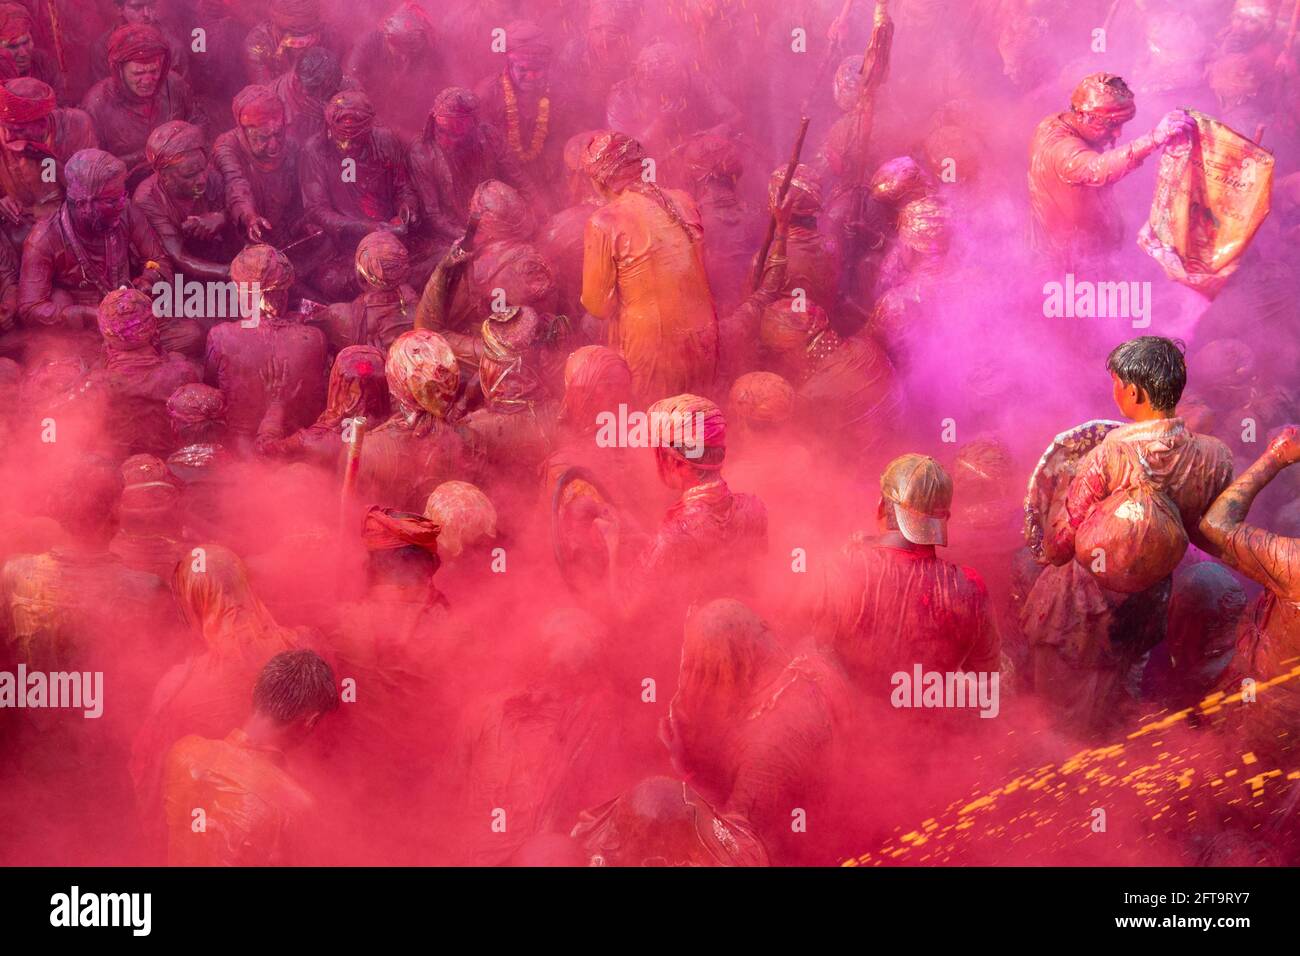 Lathmar Holi 2017 Barsana Nandgaon Vrindavan Festivals across India Festival of Colours across India Stock Photo